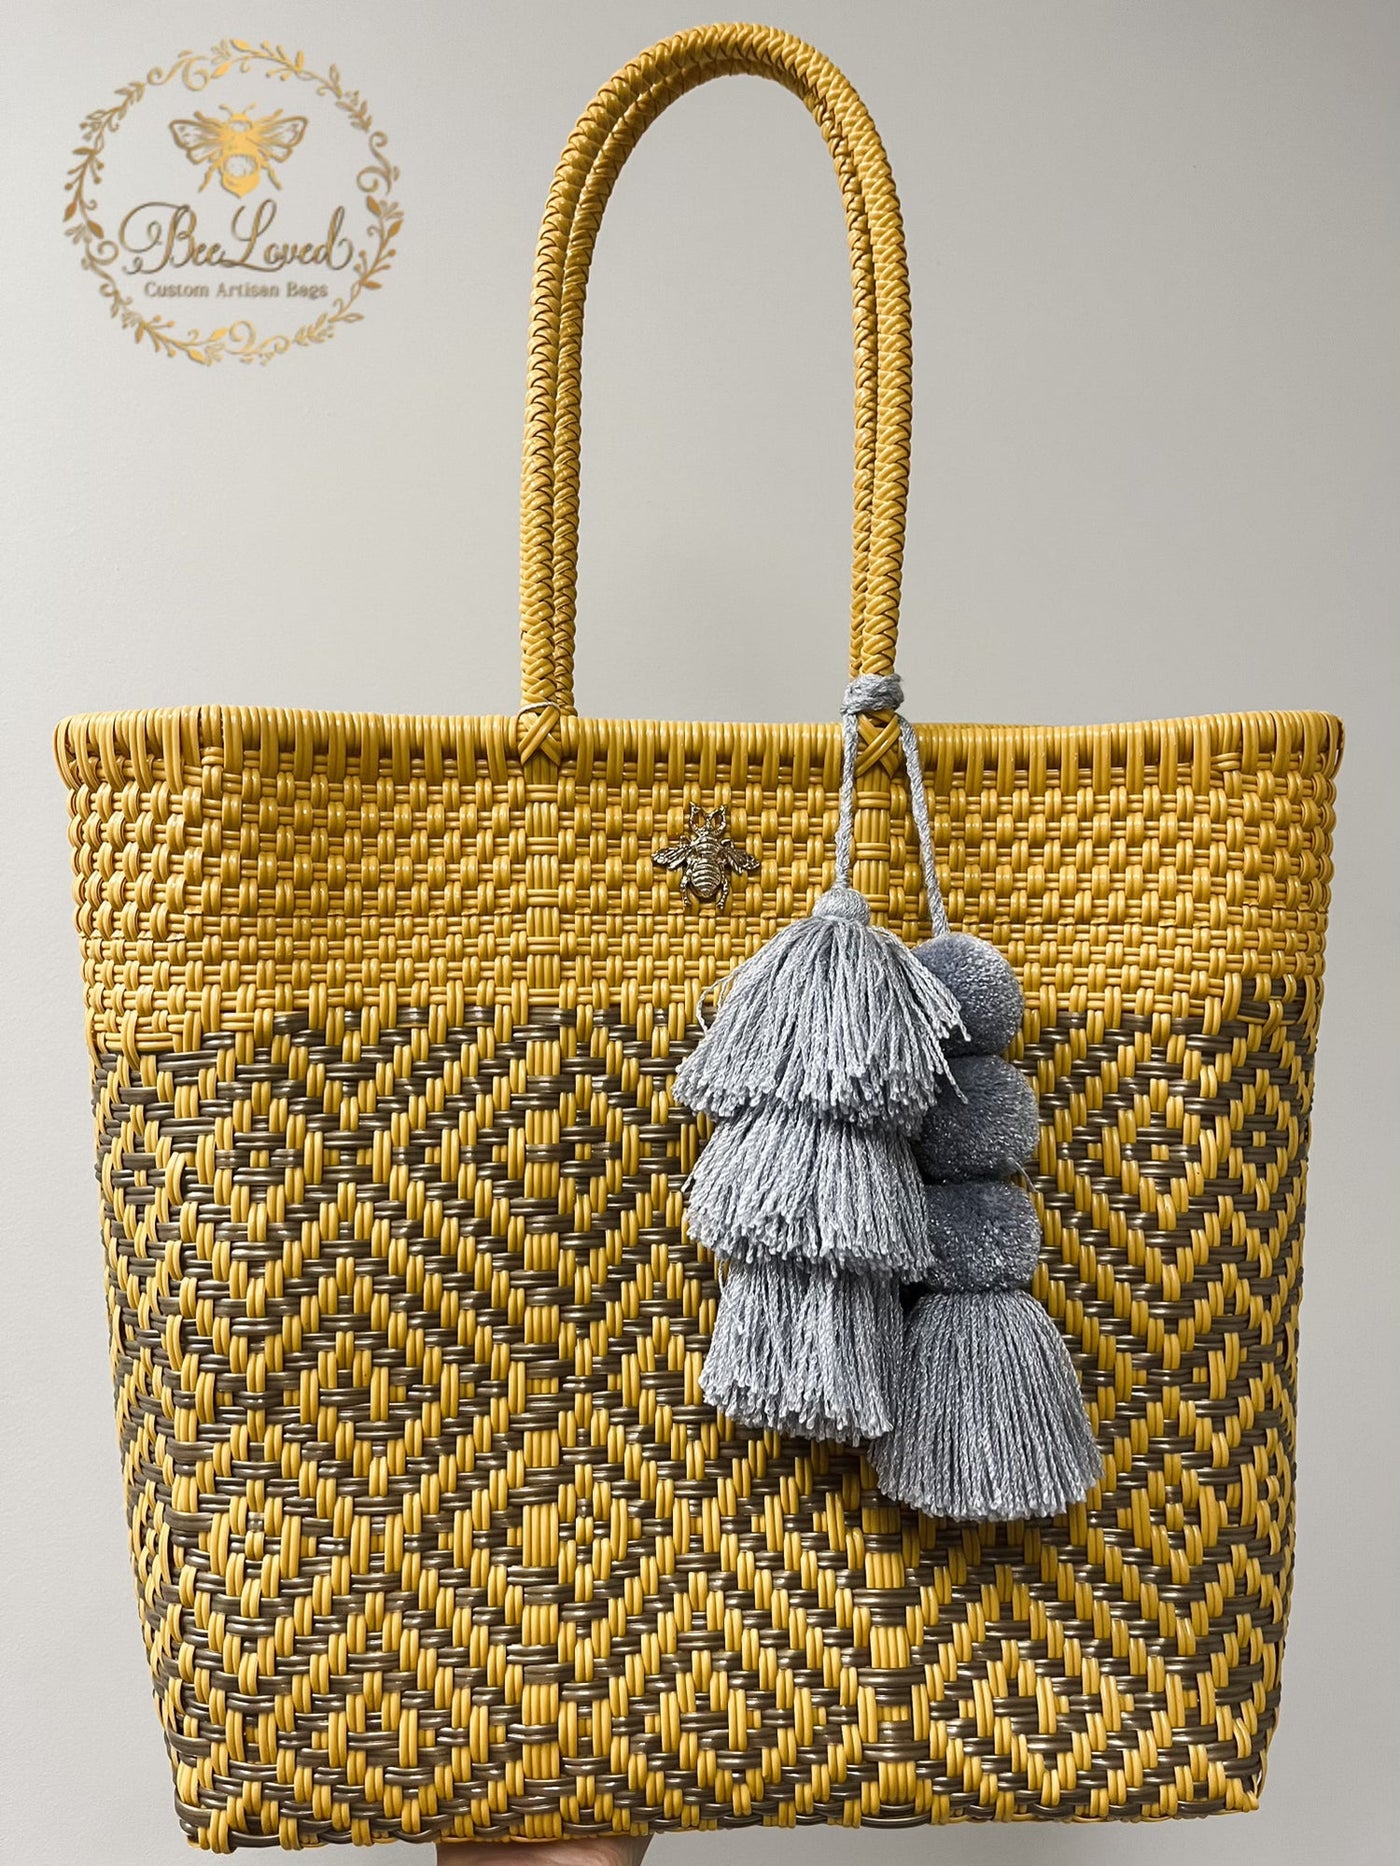 BeeLoved Custom Artisan Bags and Gifts Handbags Medium Amarillo Key Beech Bag